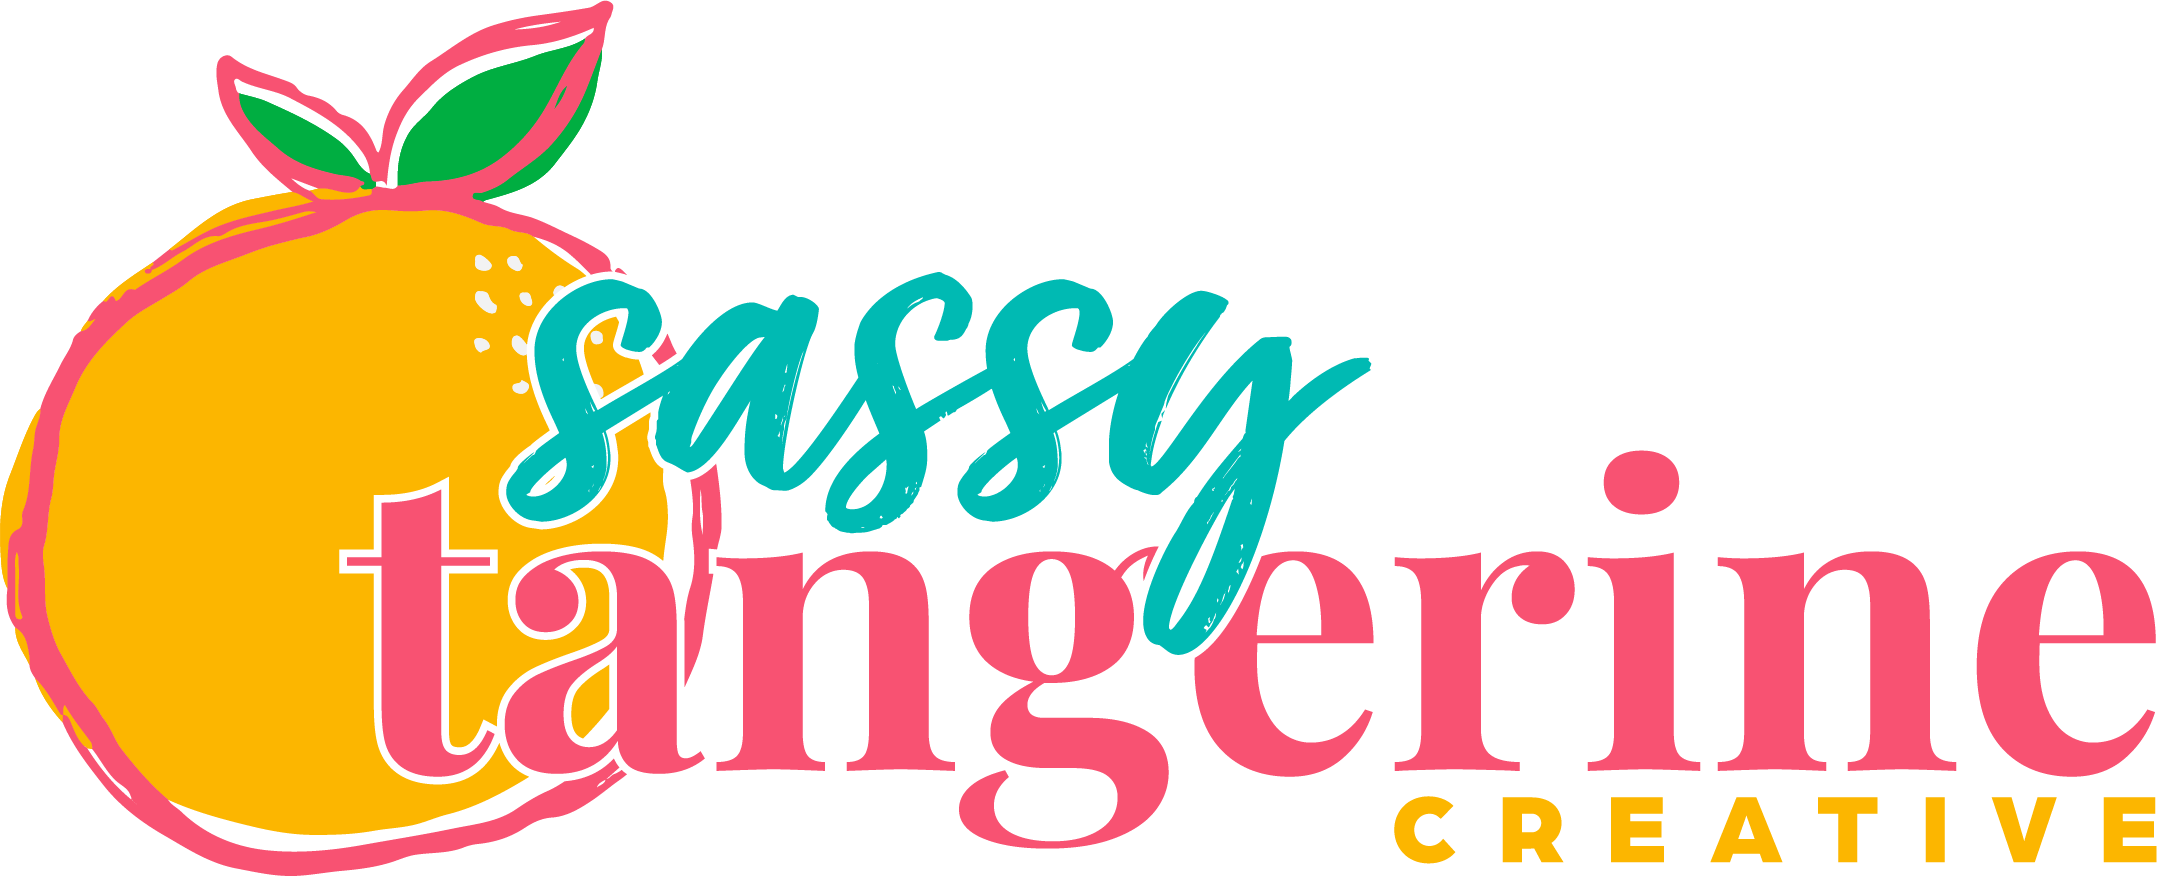 Sassy Tangerine Creative - Marketing & Design in Destin Florida